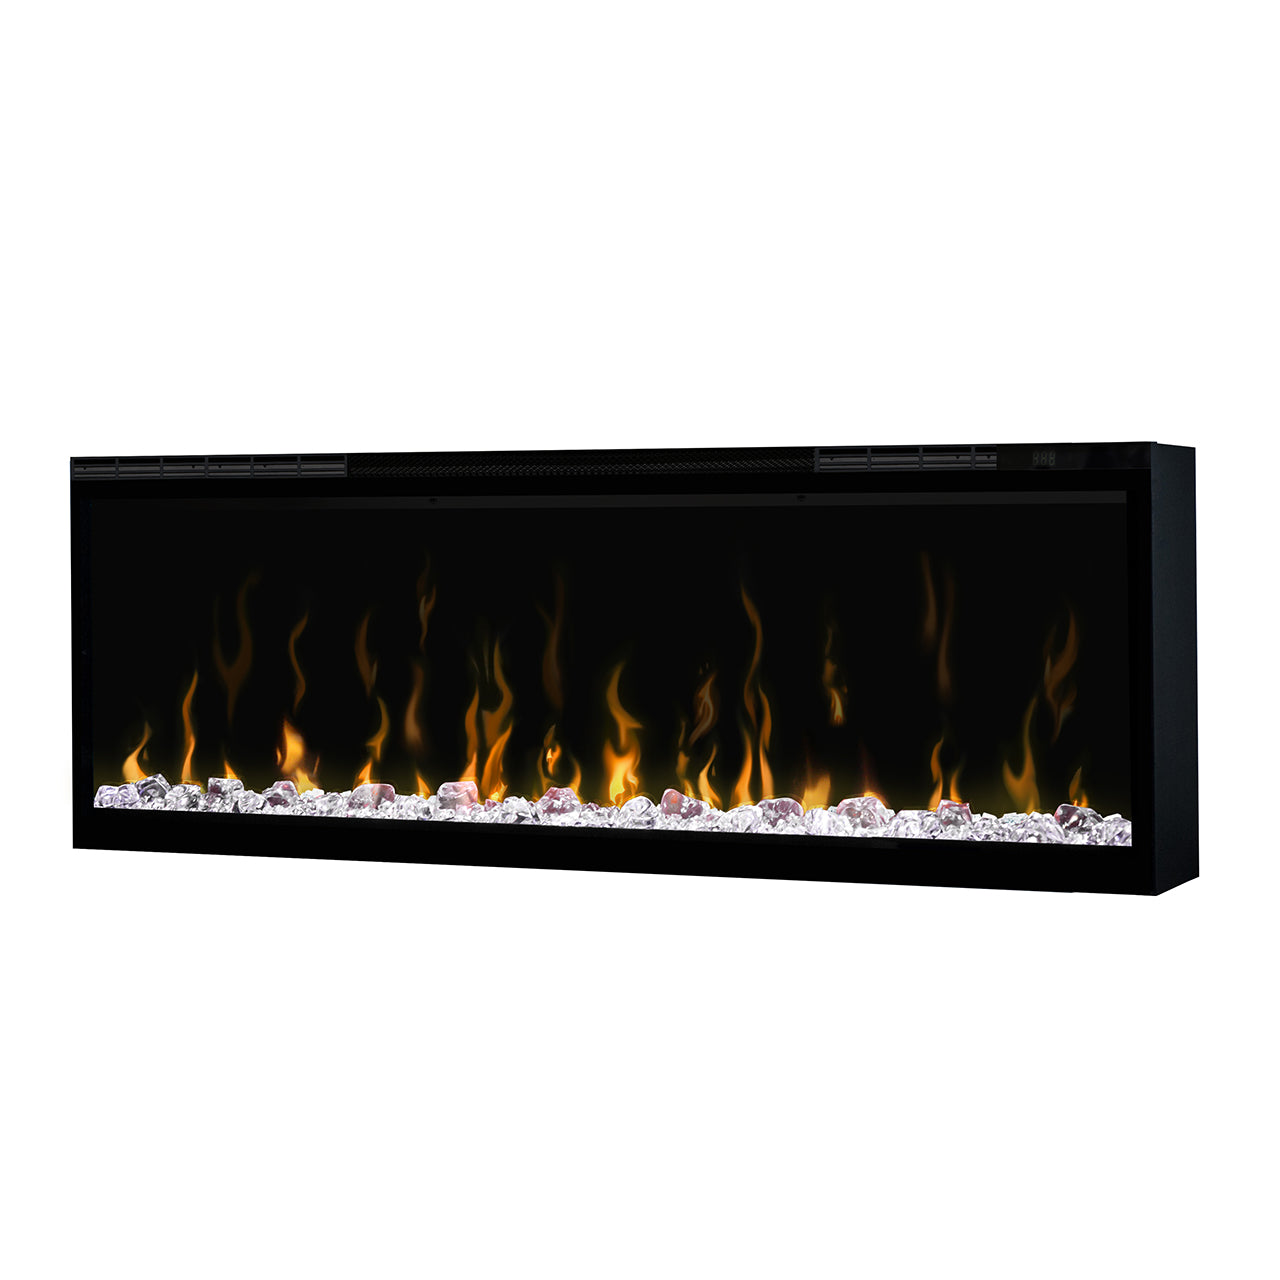 Dimplex IgniteXL 50 Inch Linear Electric Fireplace